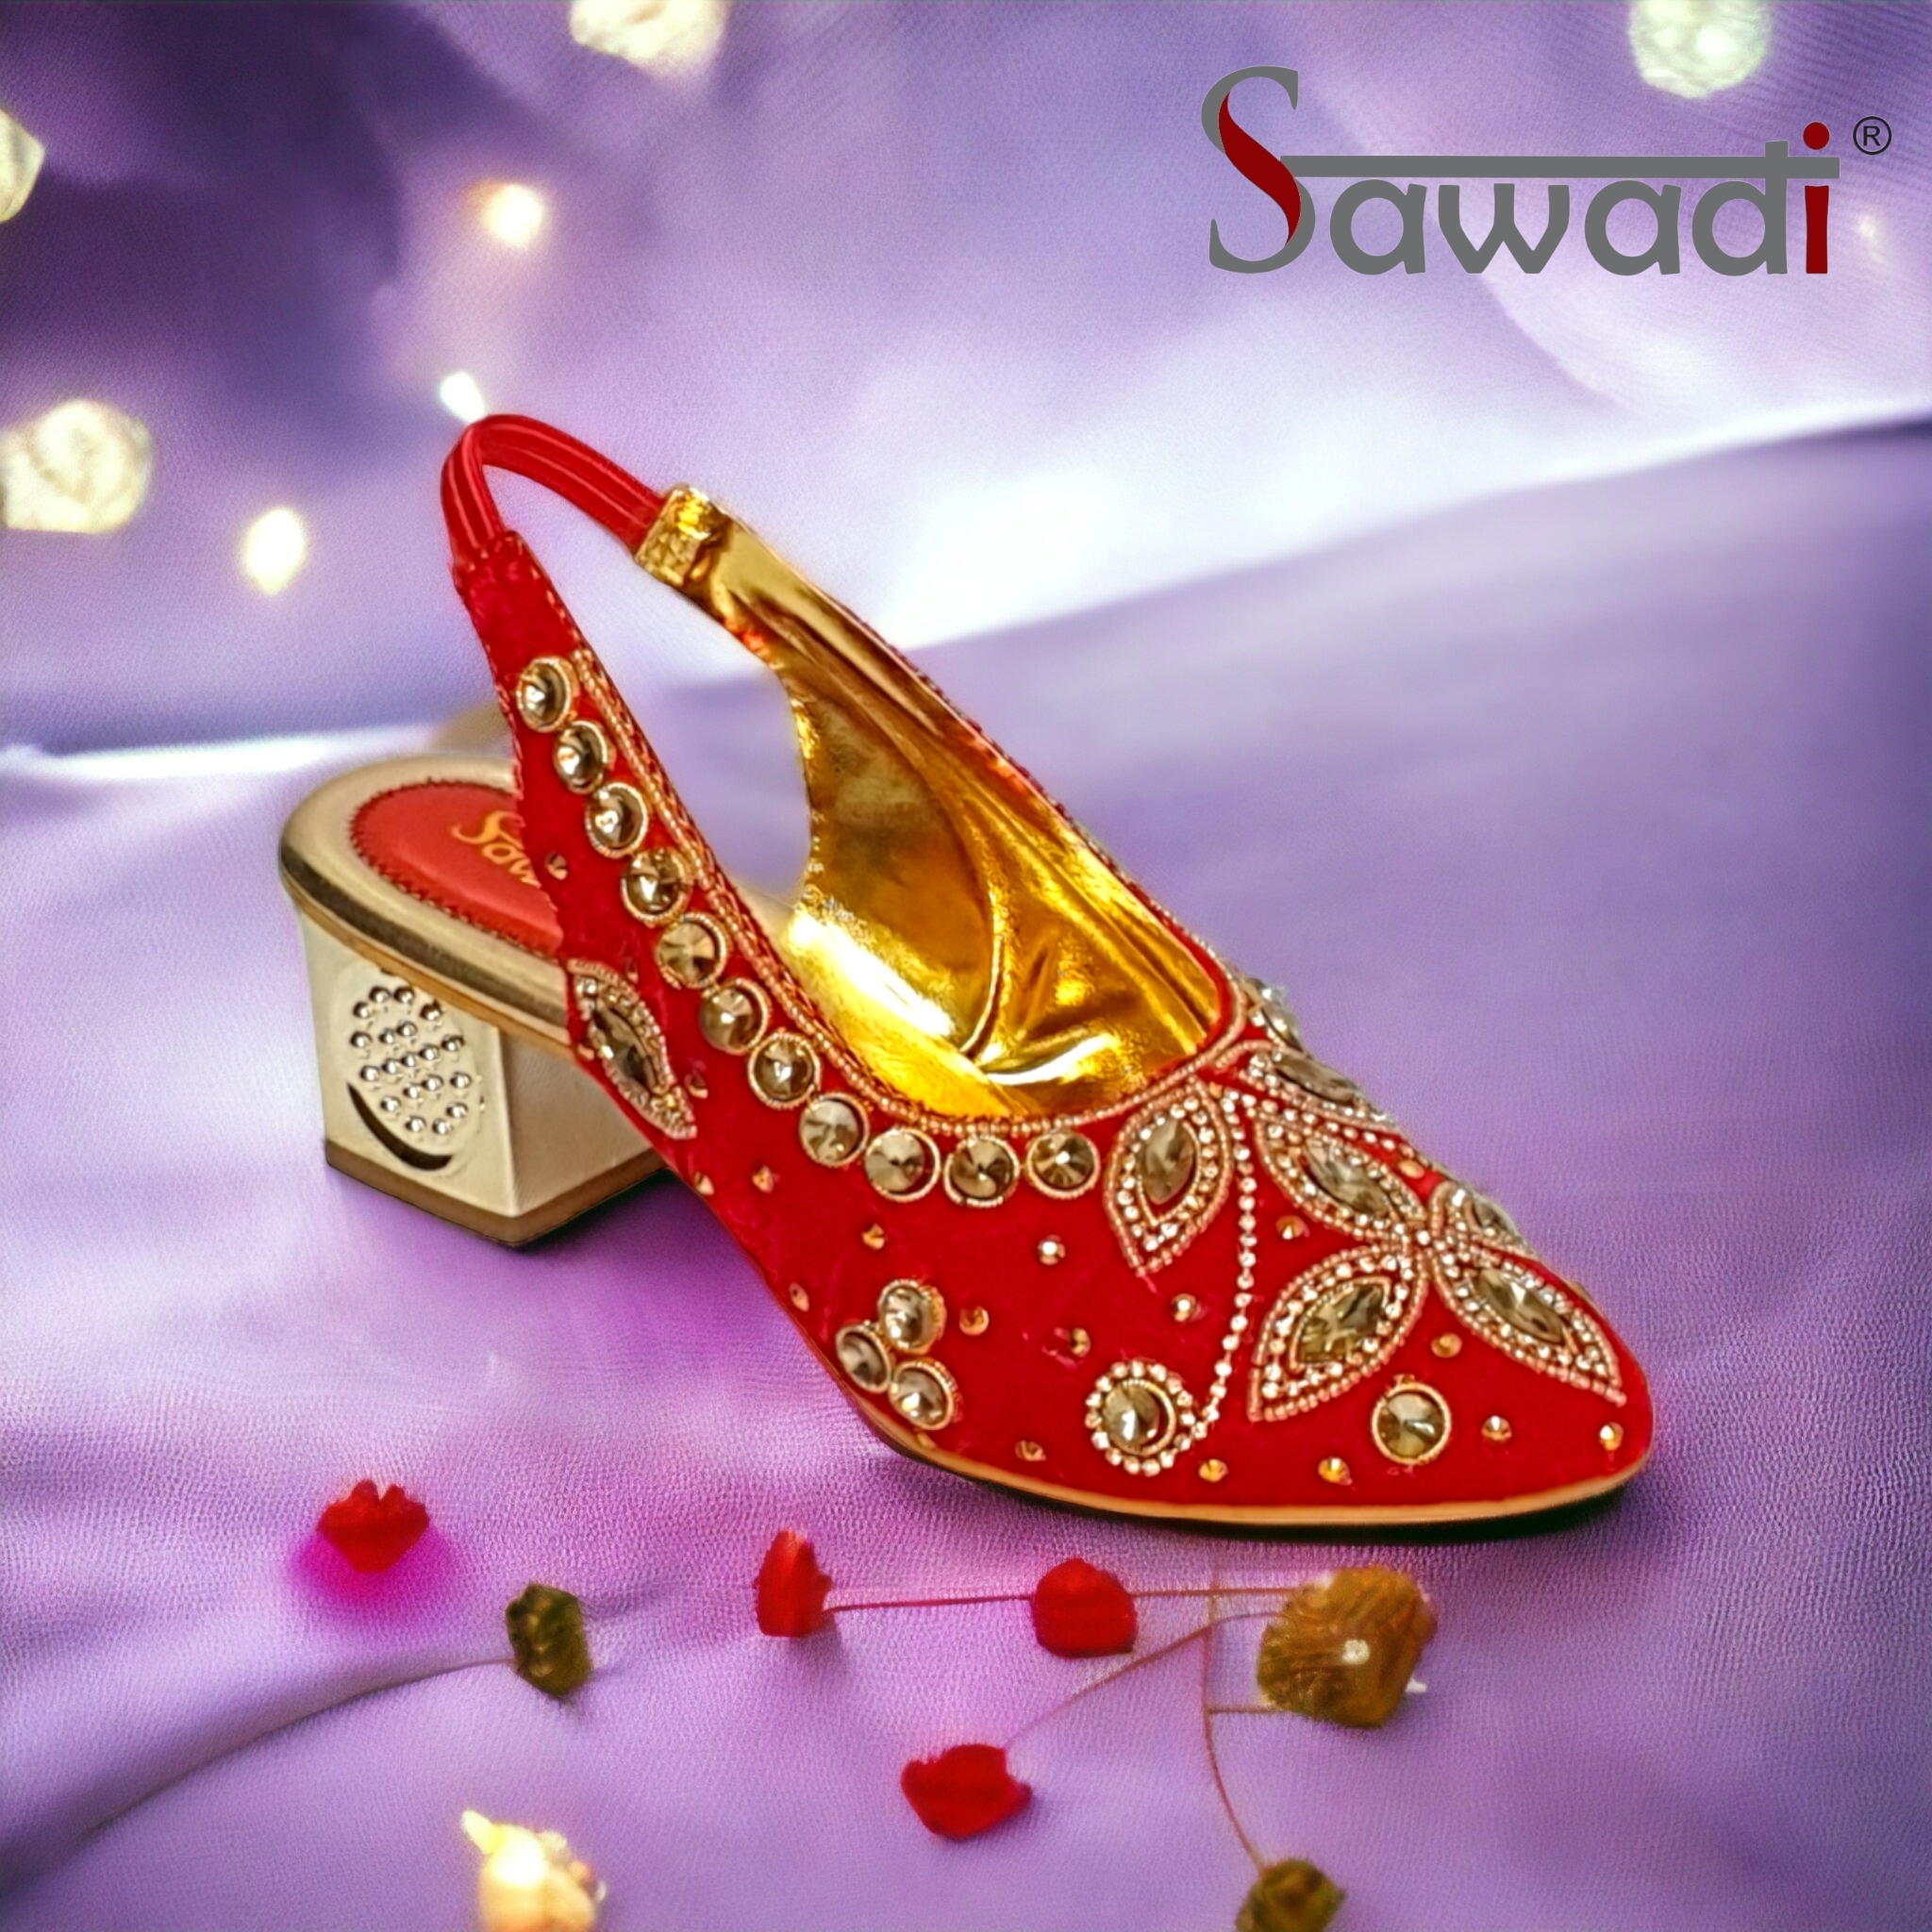 Sawadi Women Red Heel Bunto